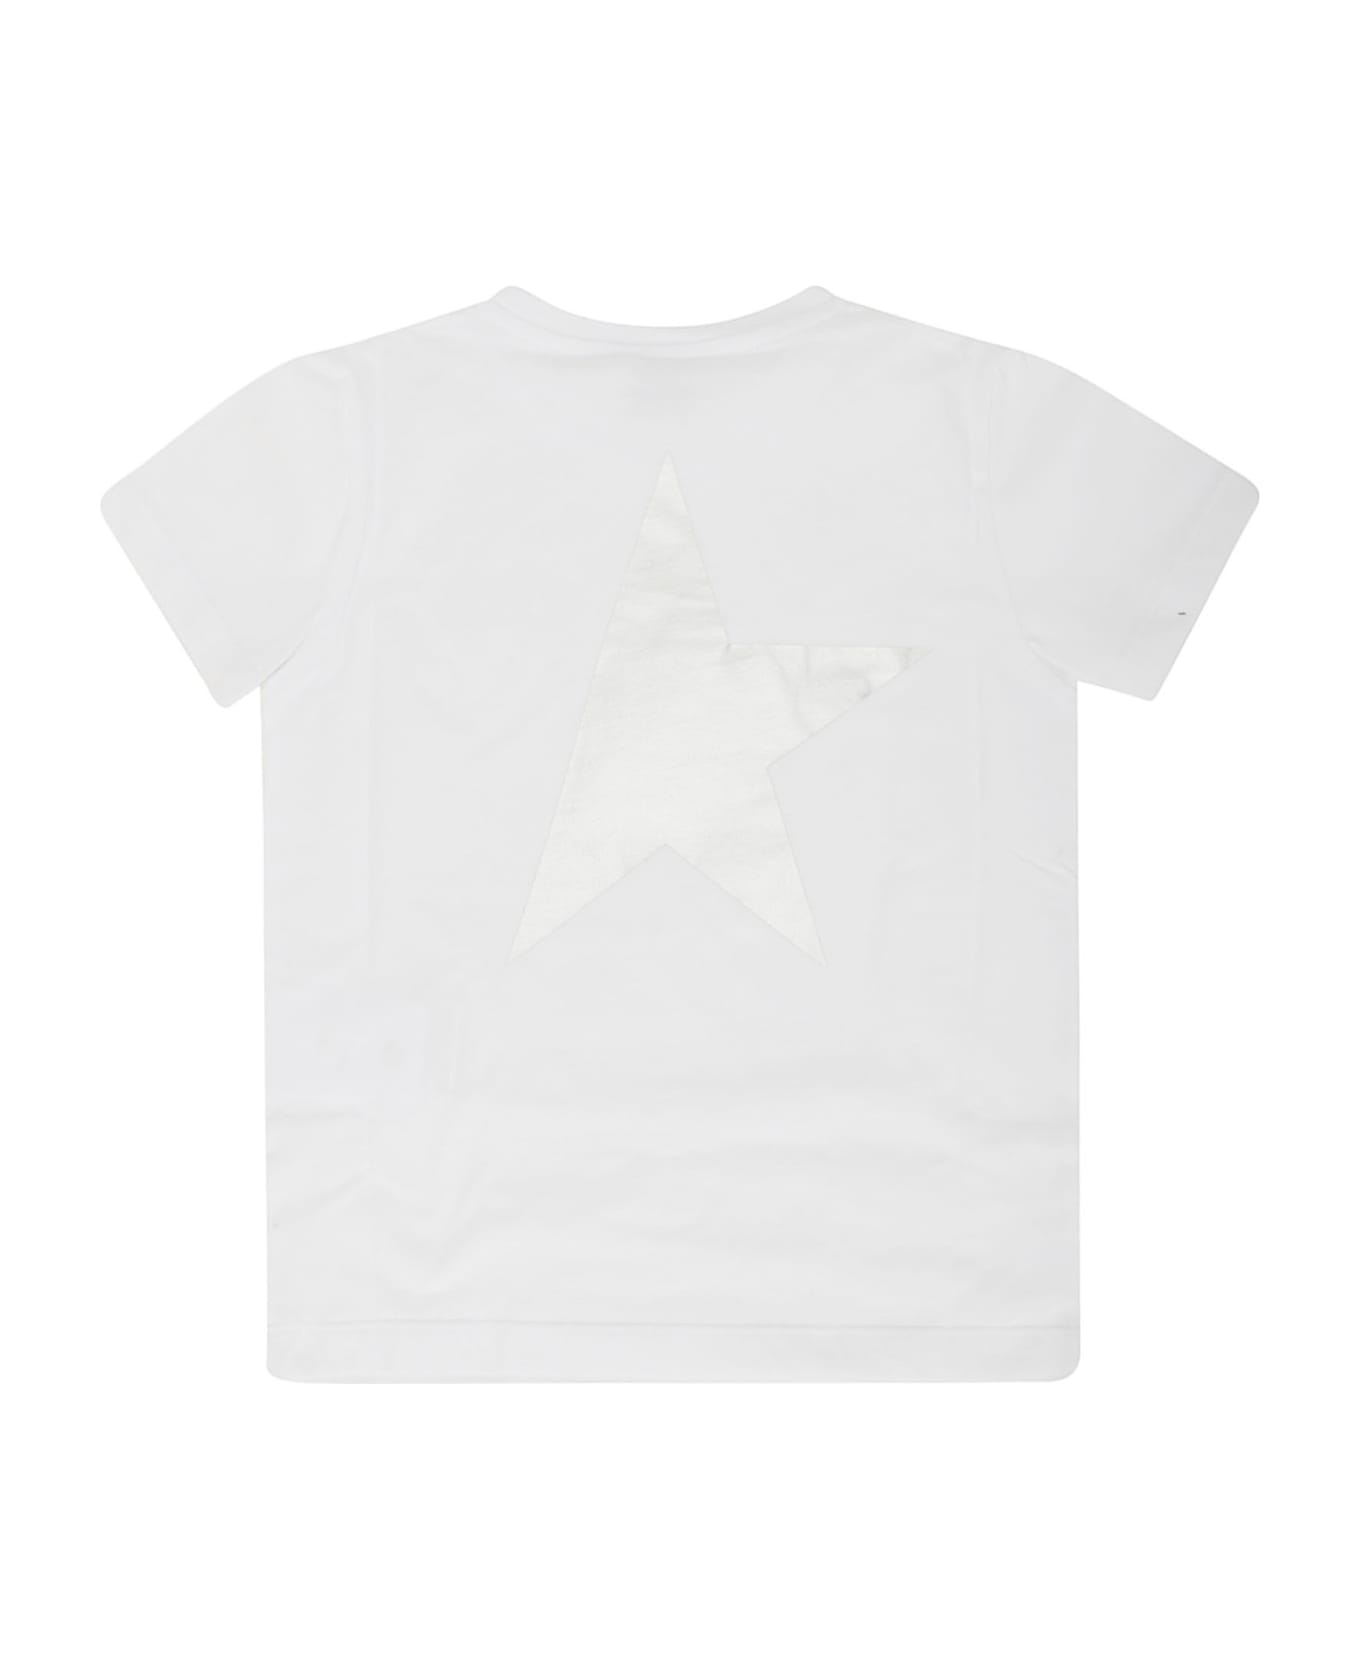 Golden Goose Star/ Boy's T-shirt S/s Logo/ Big Star Printed - WHITE/ SILVER